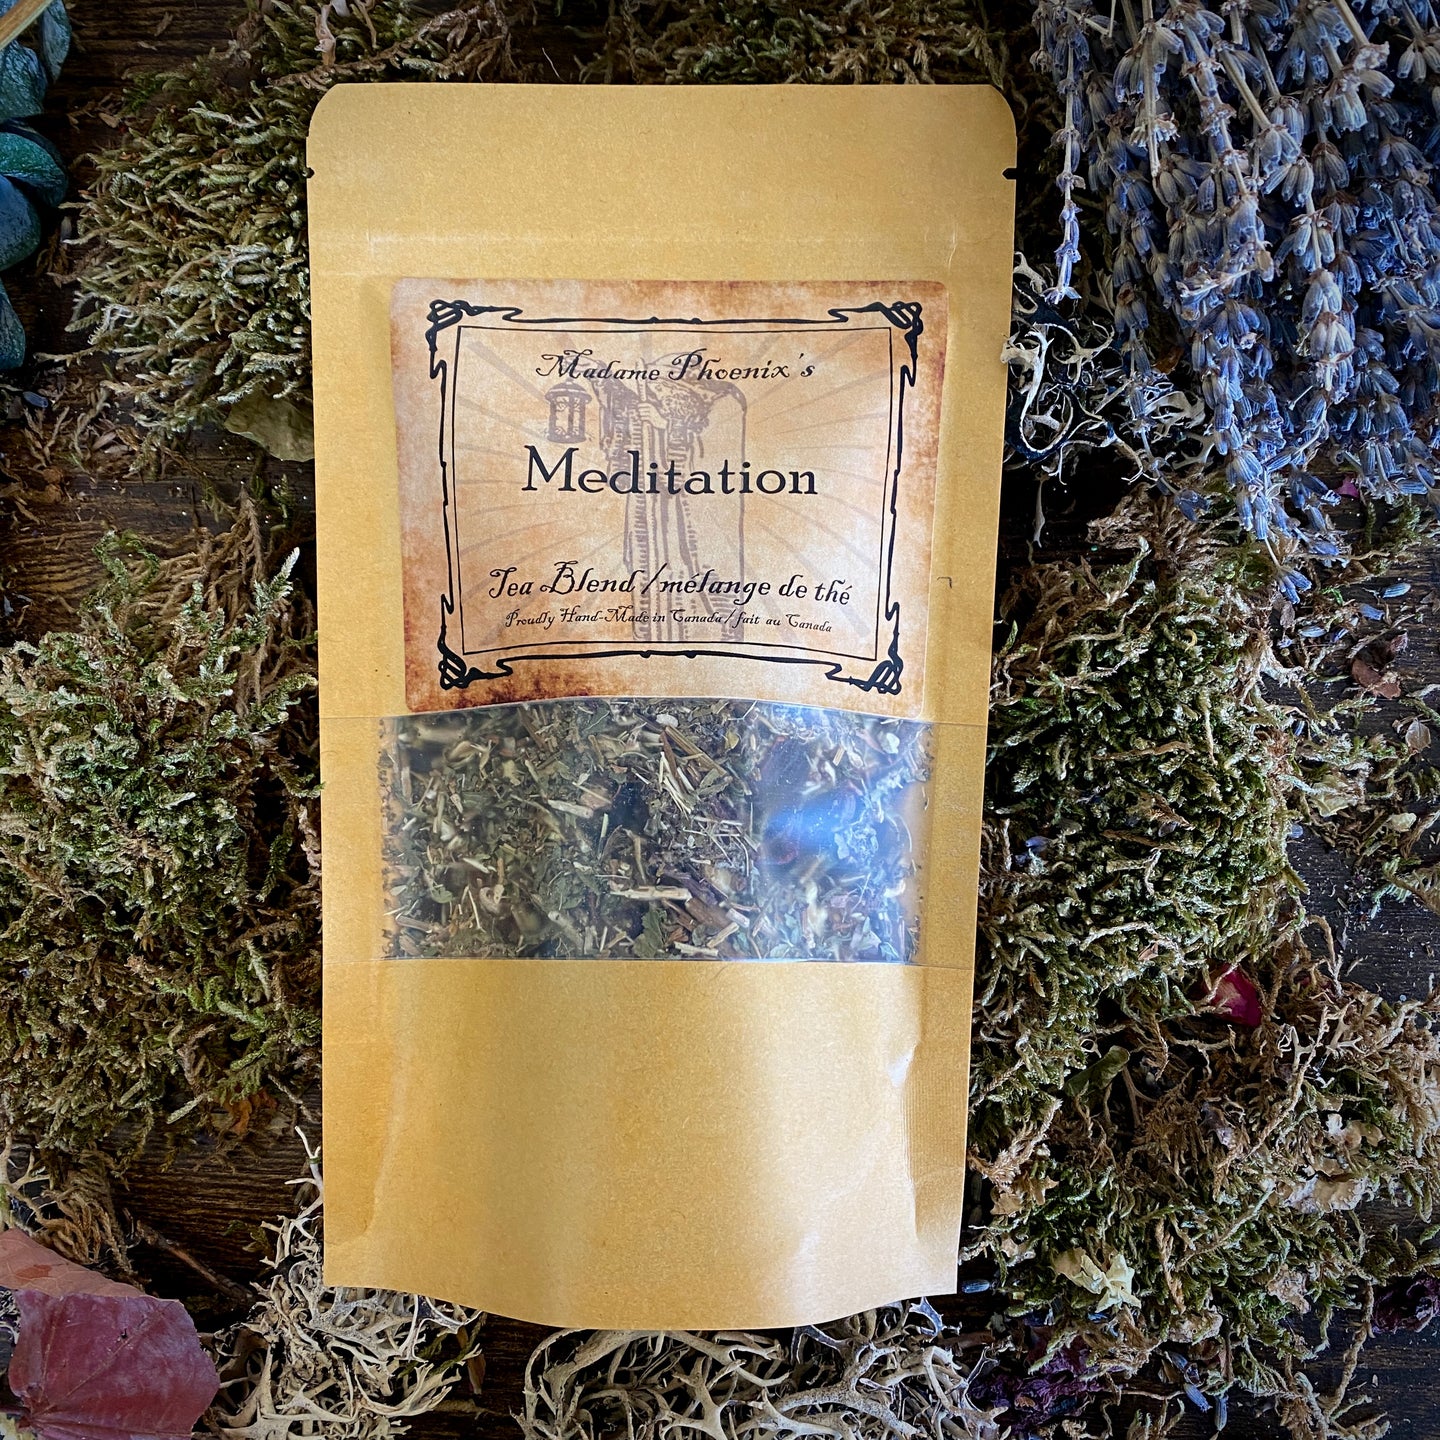 Meditation Magical Tea Blend